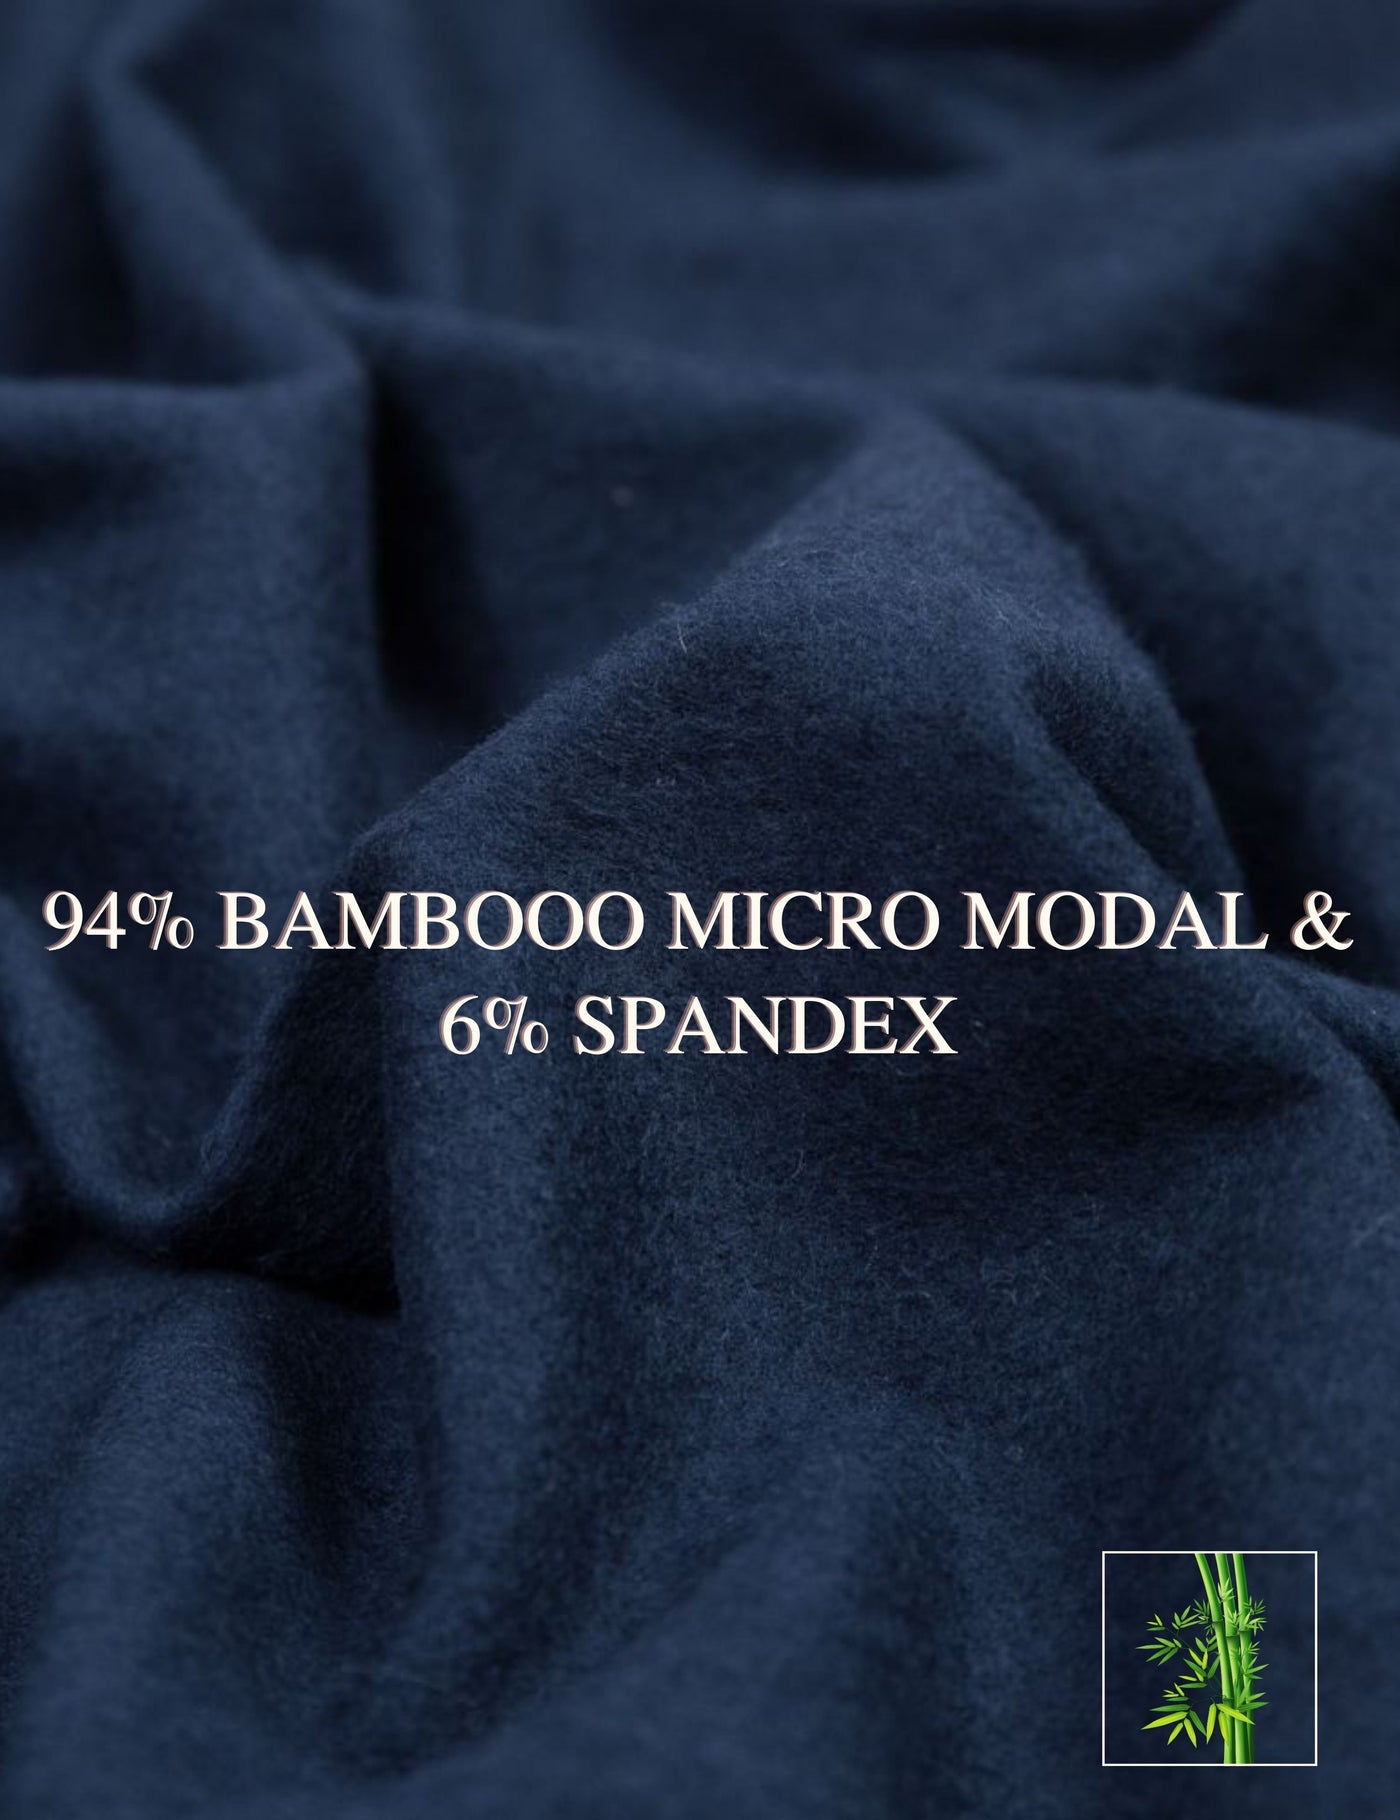 Buy online Bikini Bamboo Micro Modal, Antibacterial, Premium Women Panty  from lingerie for Women by Ashleyandalvis for ₹649 at 27% off